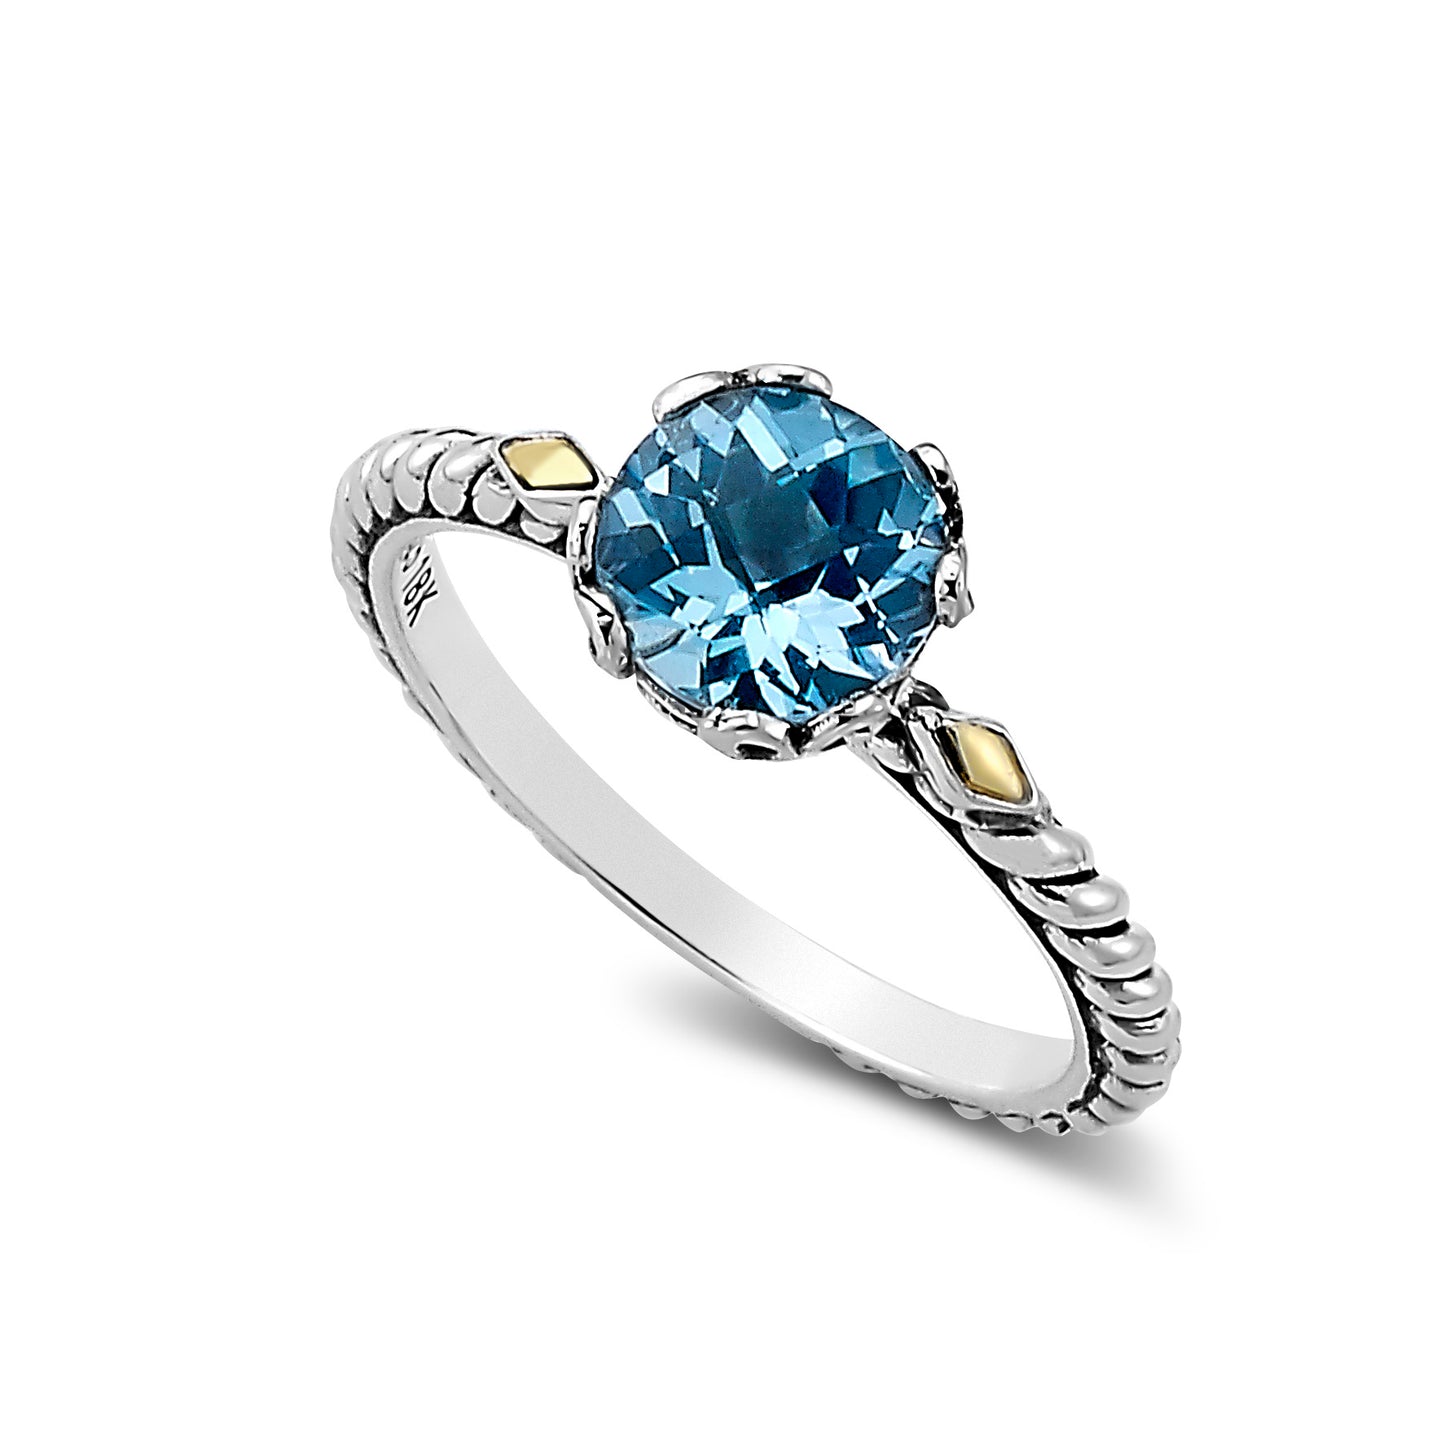 Bali Blue Topaz Ring